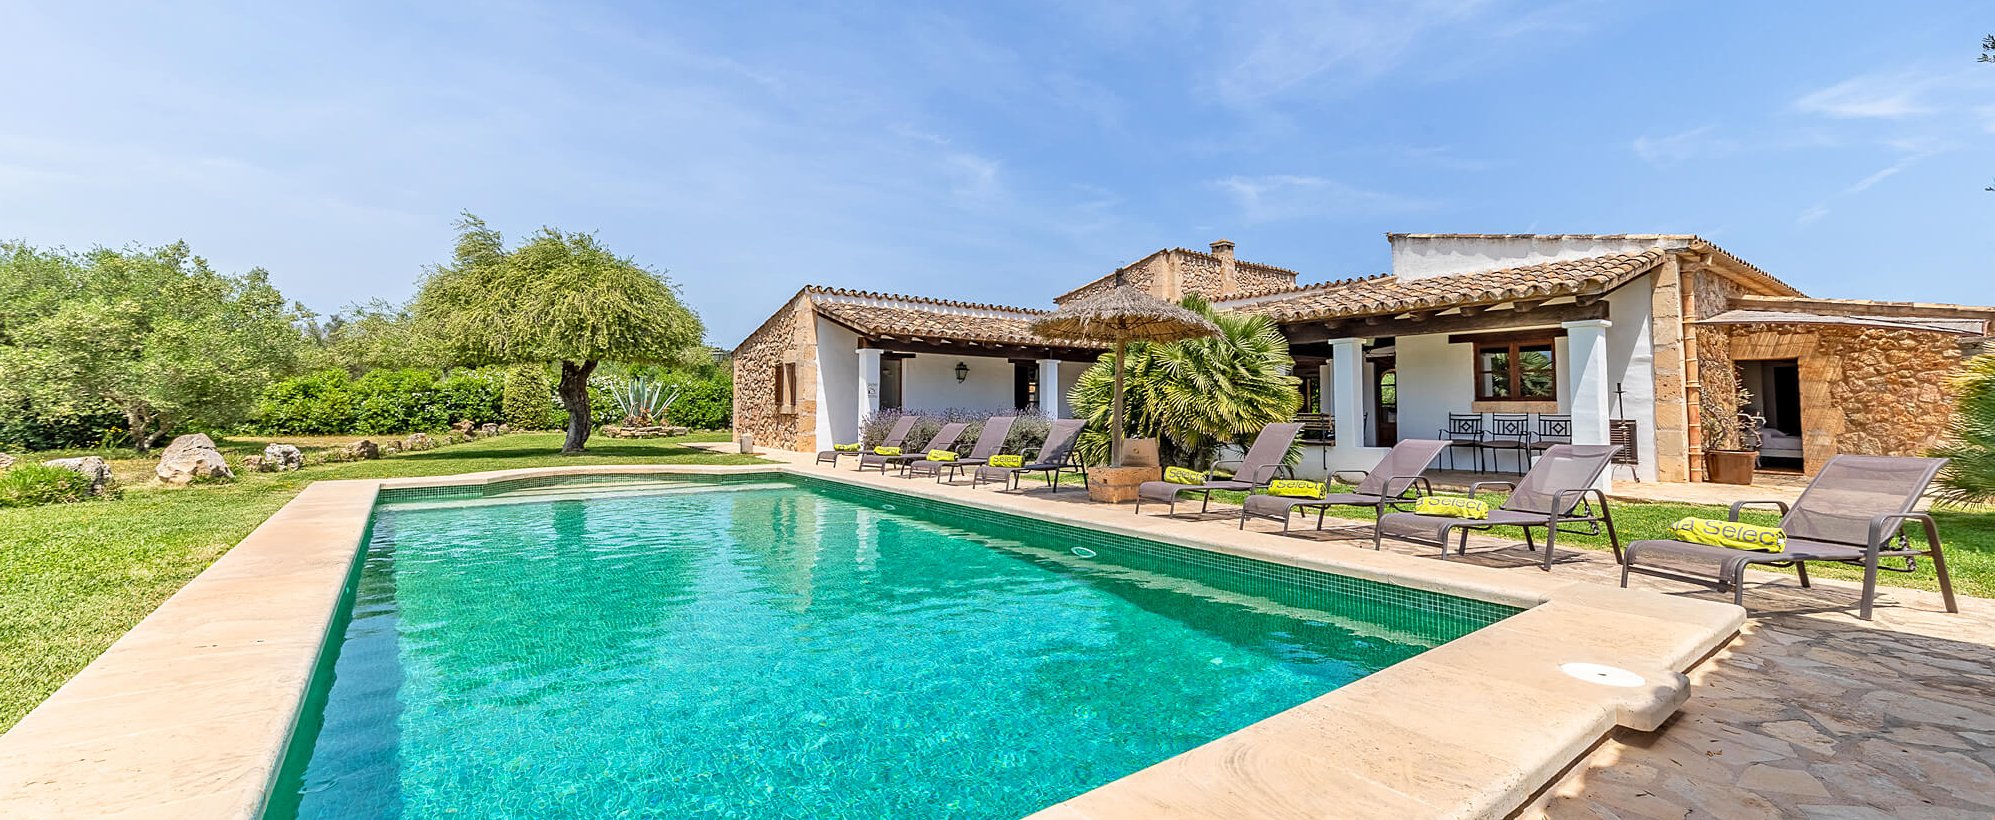 Ferienhaus Mallorca mit privatem Pool für 8 Personen - MA4315.